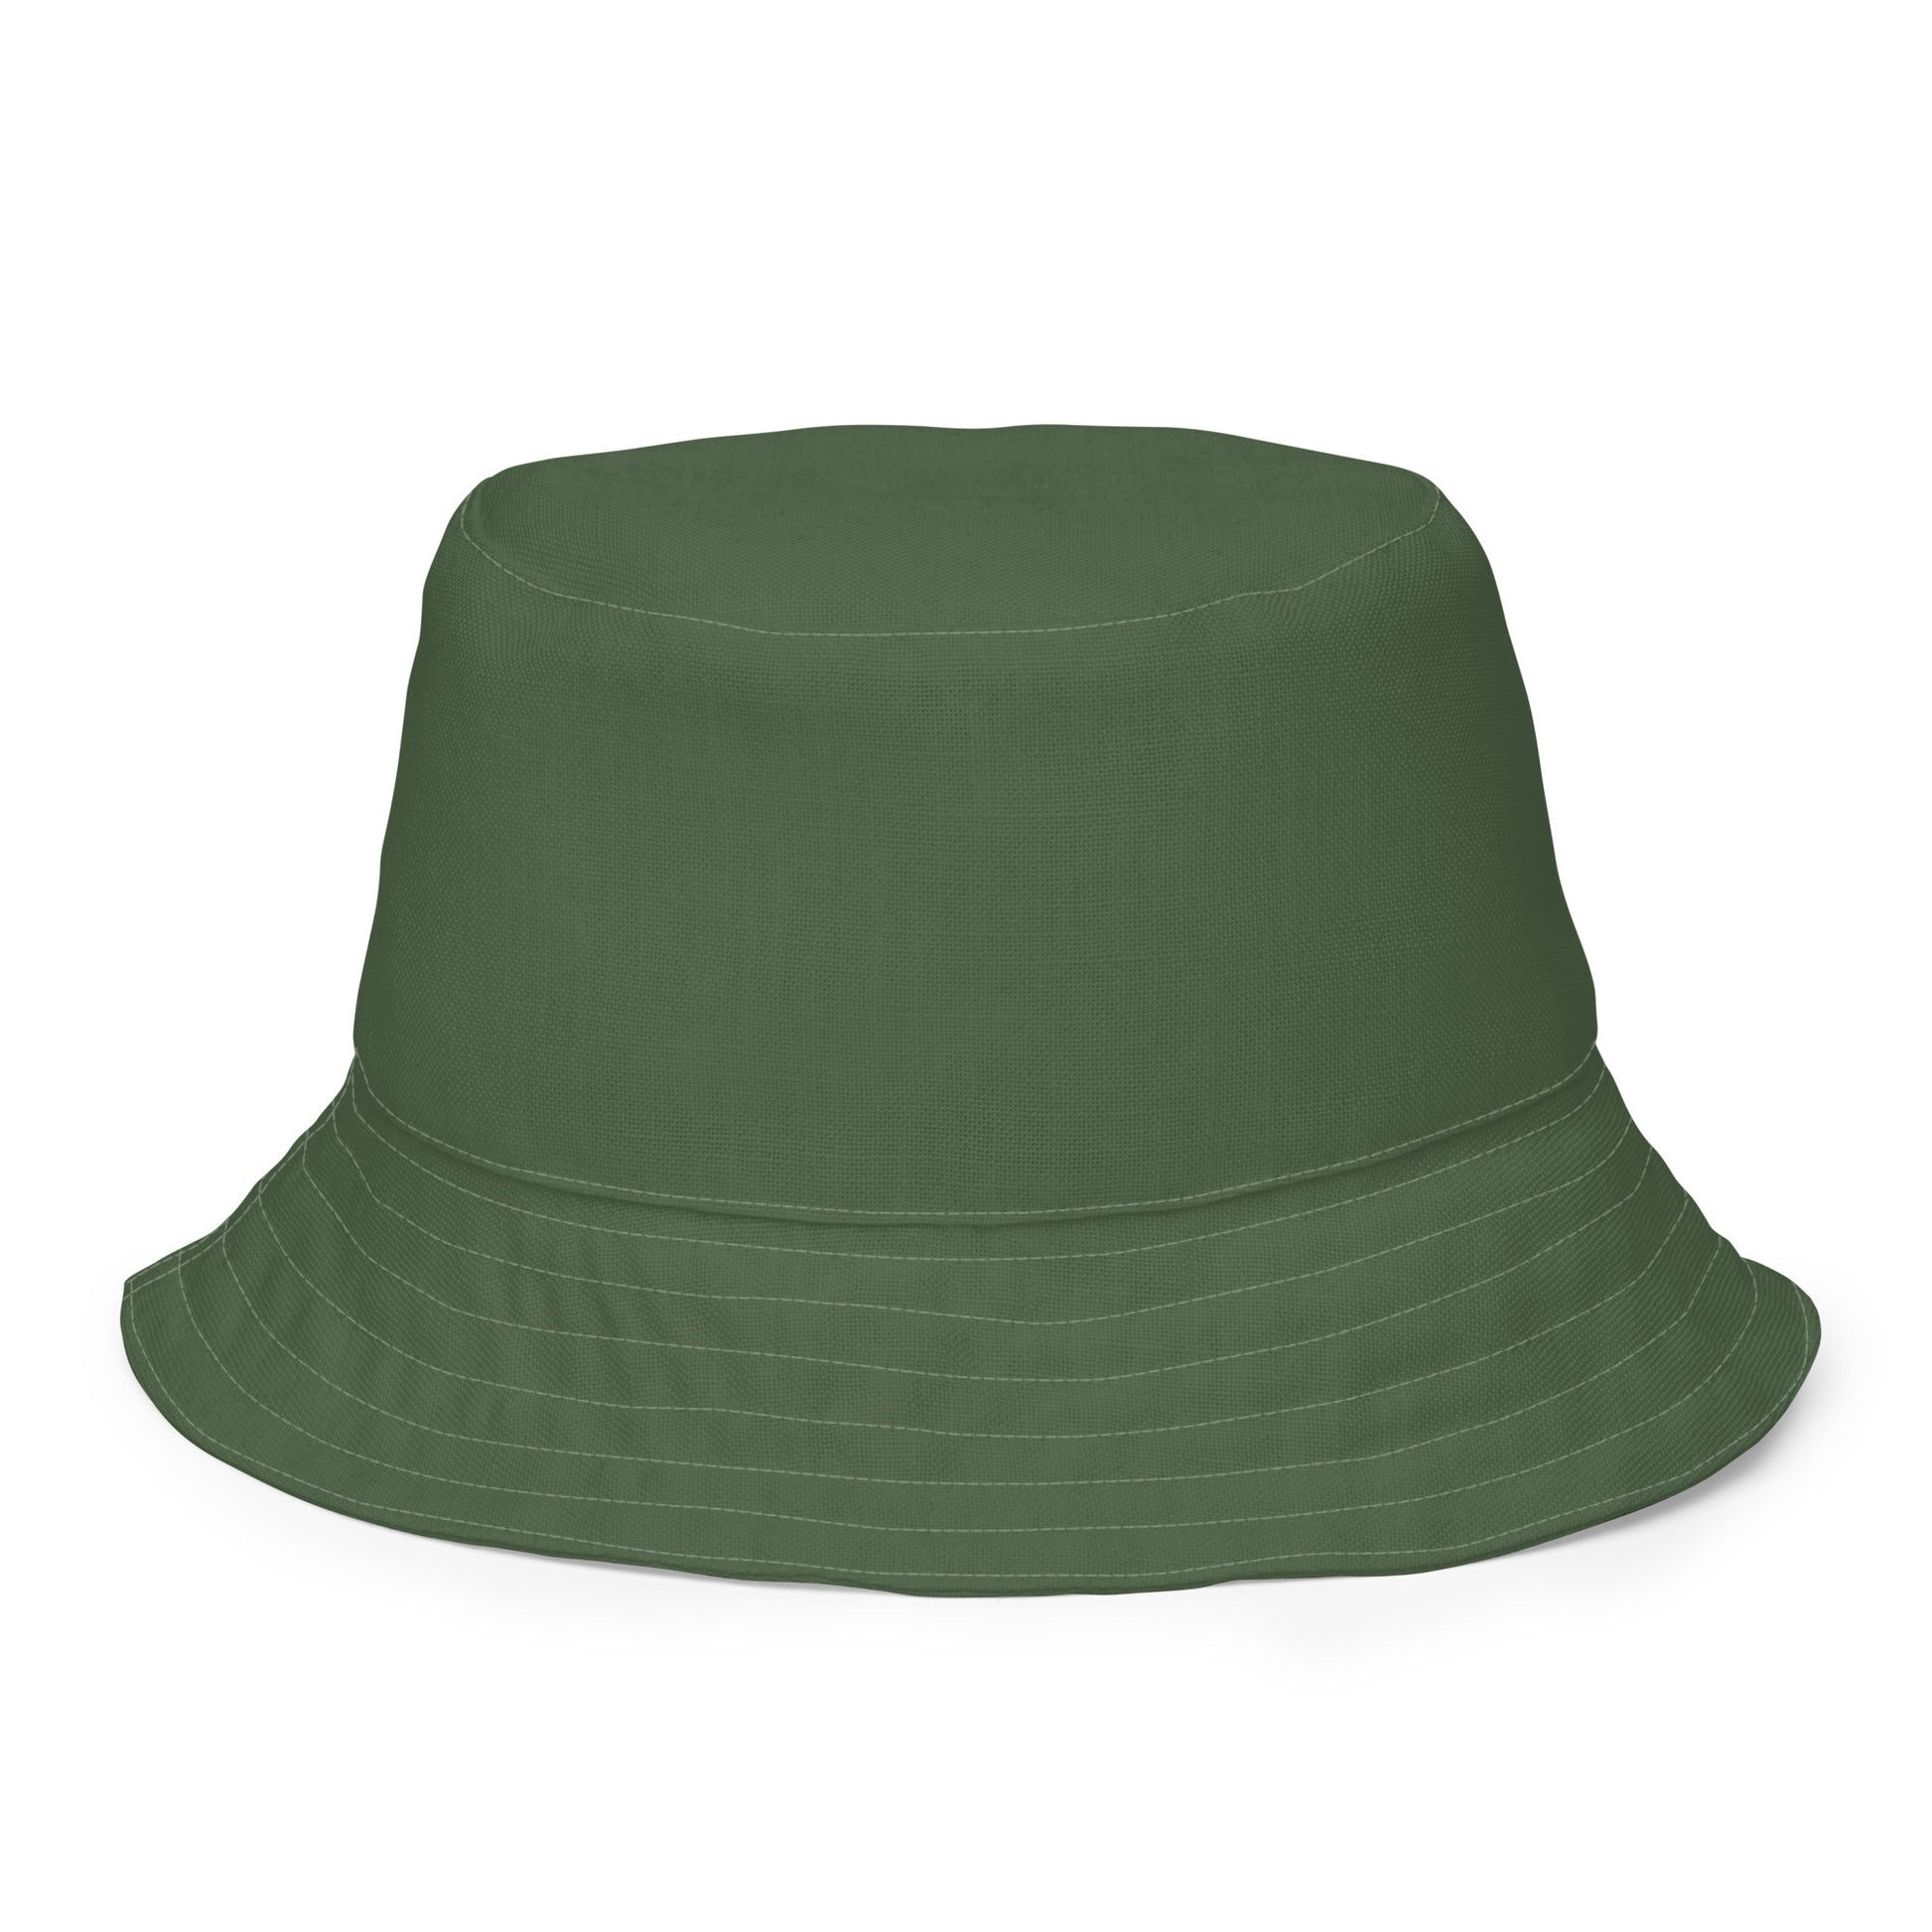 Valkovuokko - Reversible bucket hat - Hats- Print N Stuff - [designed in Turku Finland]